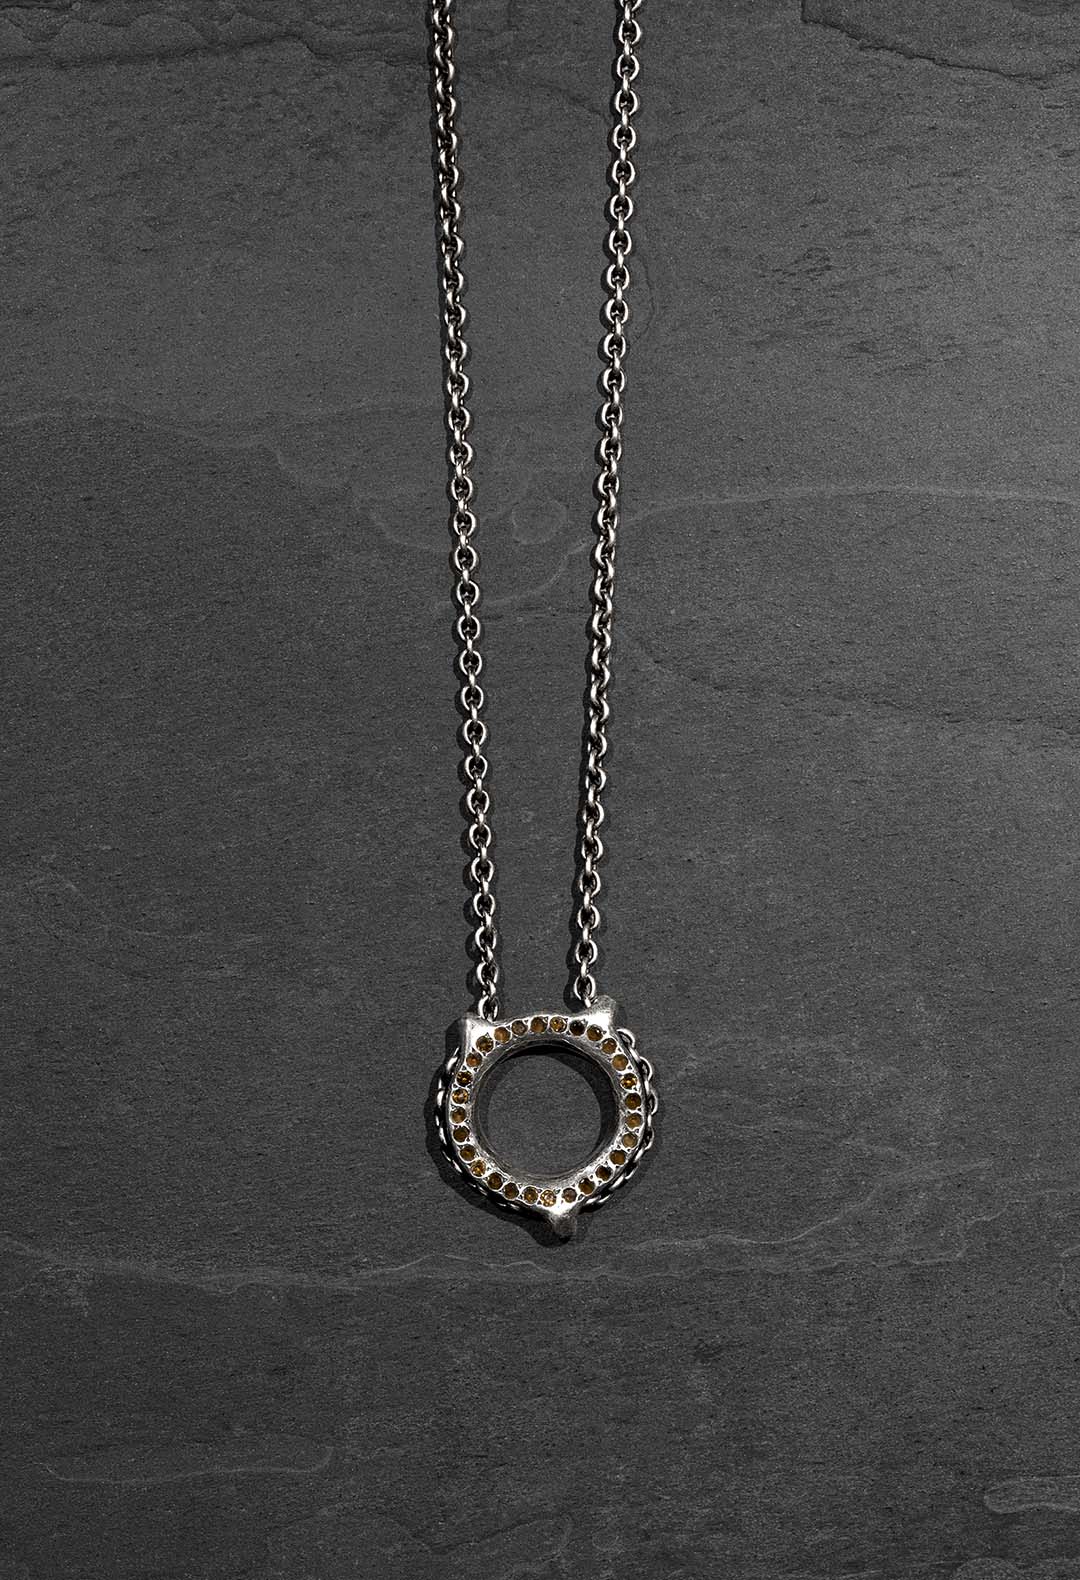 Chain loop stones necklace